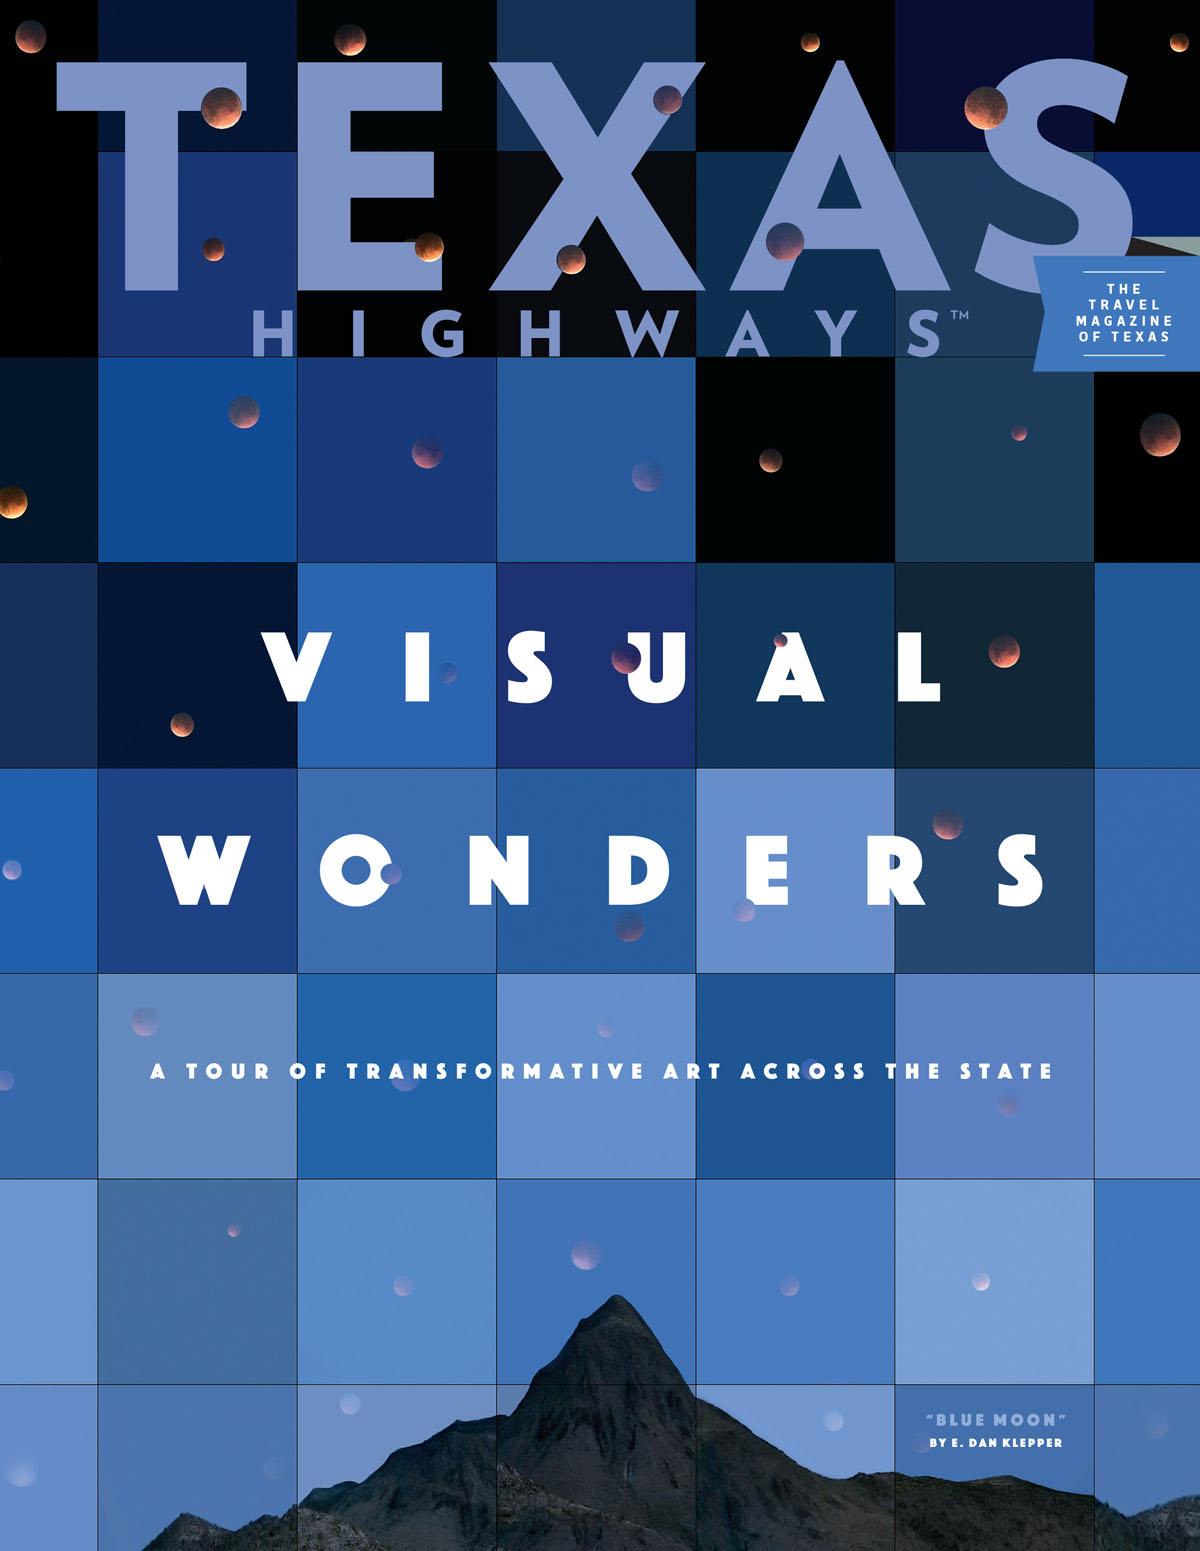 The September 2022 issue of Texas Highways Magazine